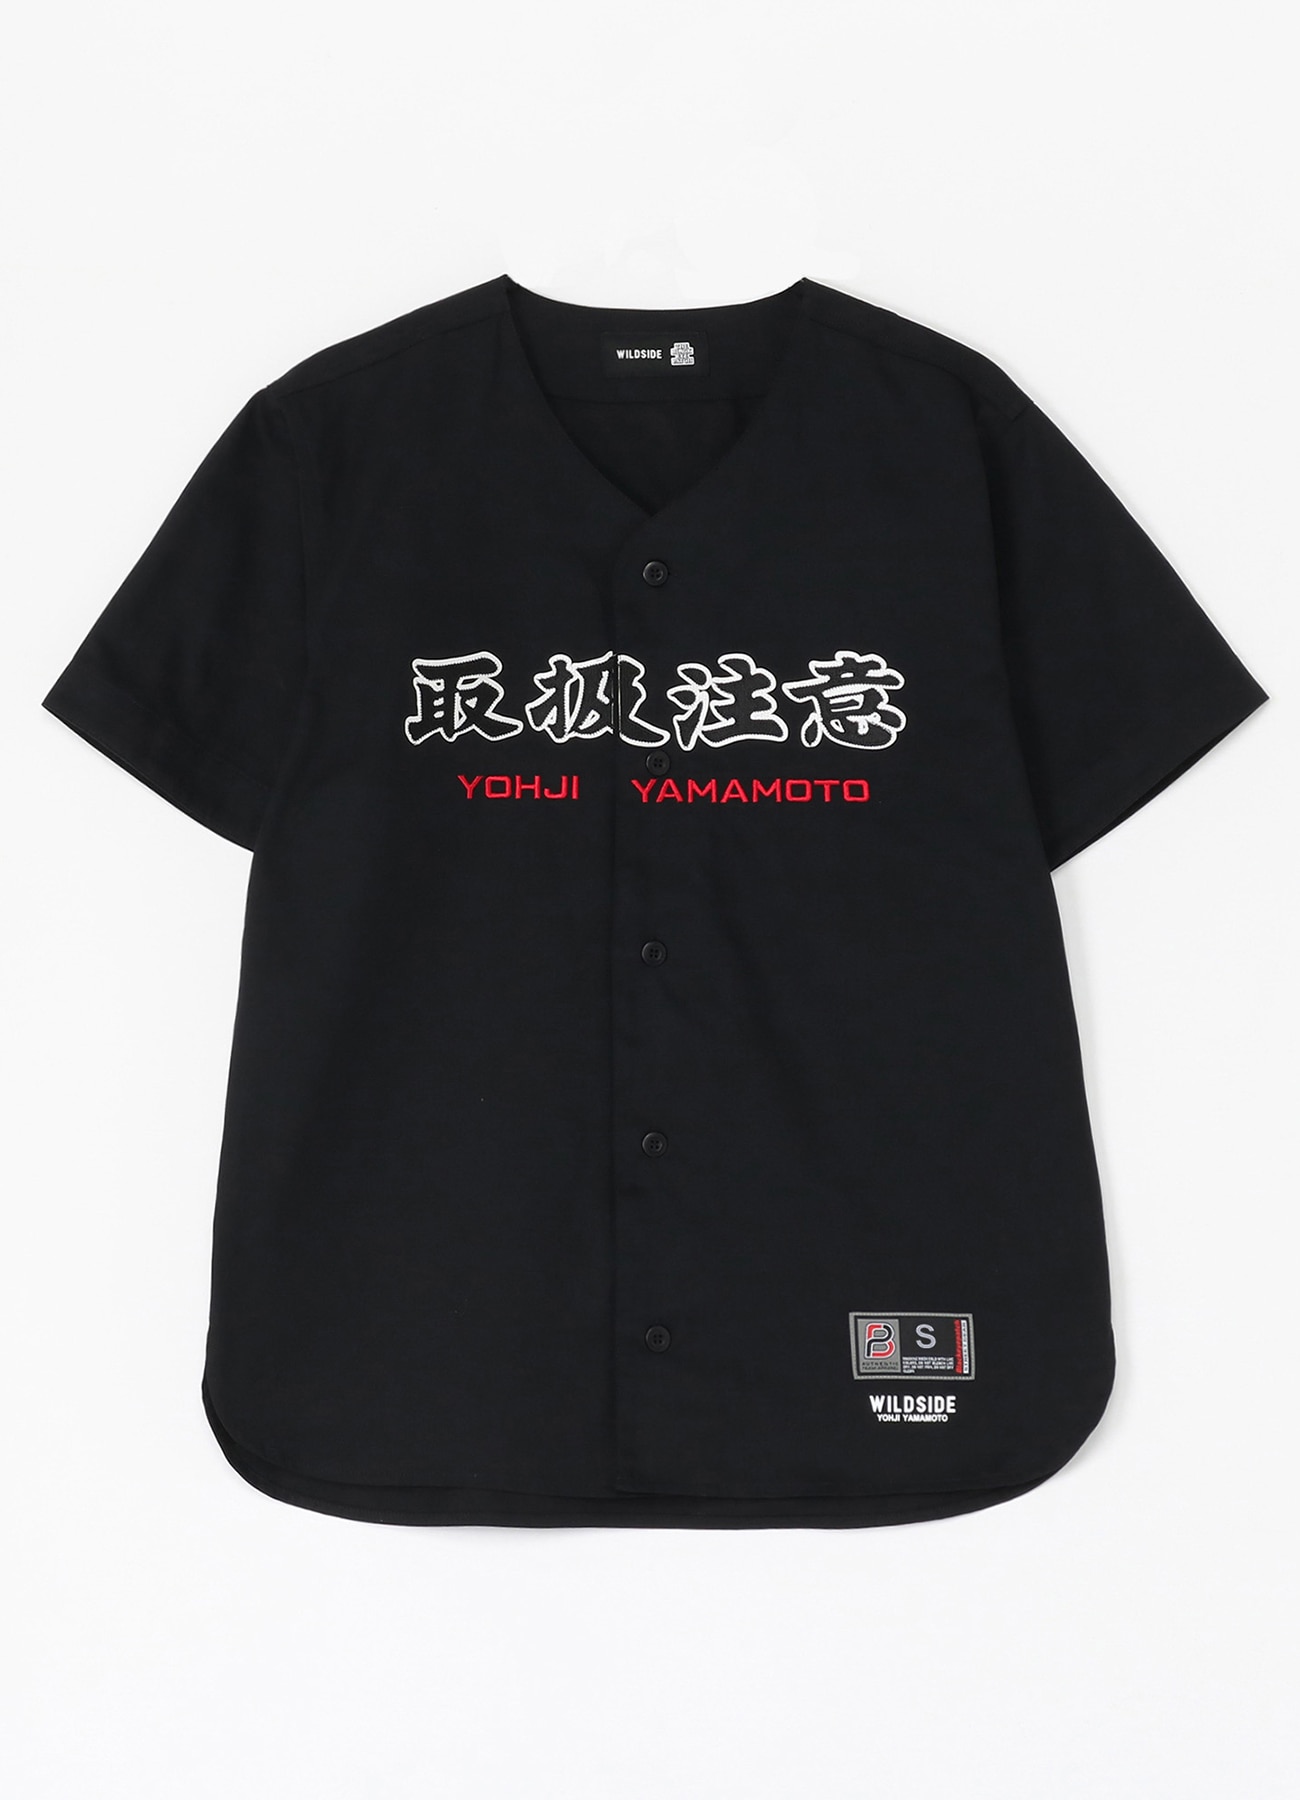 WILDSIDE × BlackEye Patch NOIR EYE PATCH Baseball T-shirt